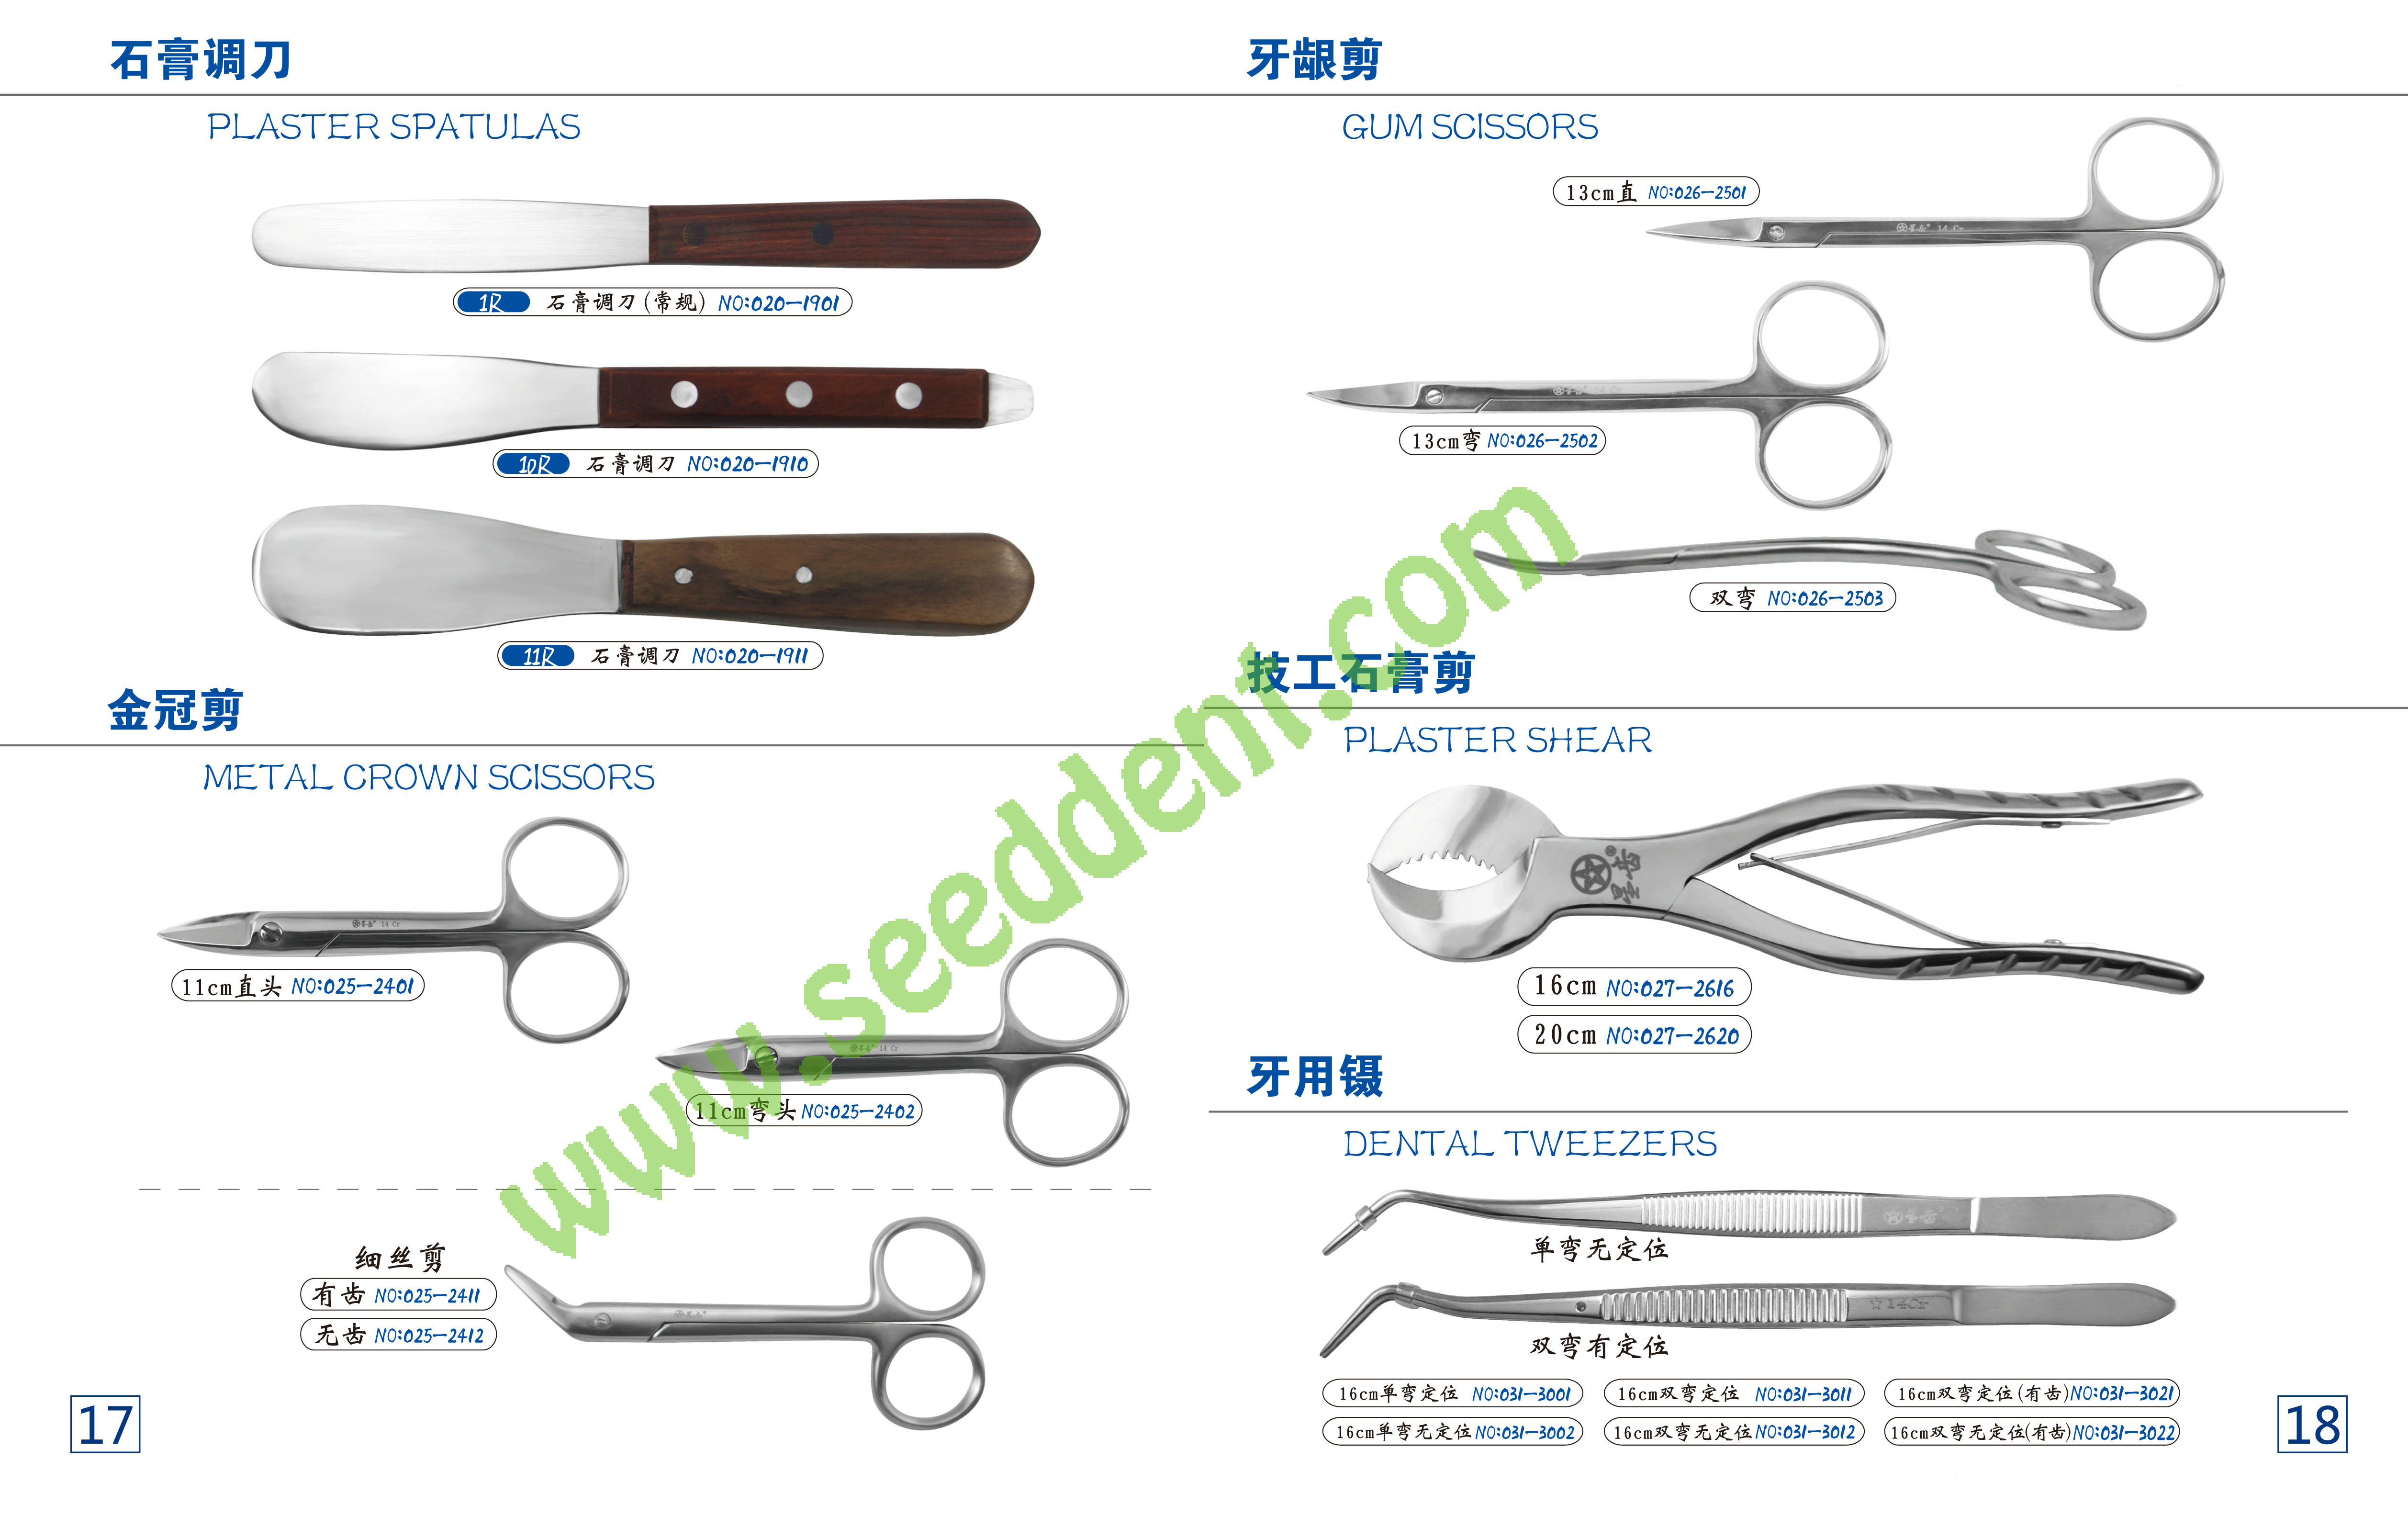 Best Plaster Spatulas / Metal Crown Scissors / Gum Scissors / Plaster Shear / Dental Tweezers wholesale